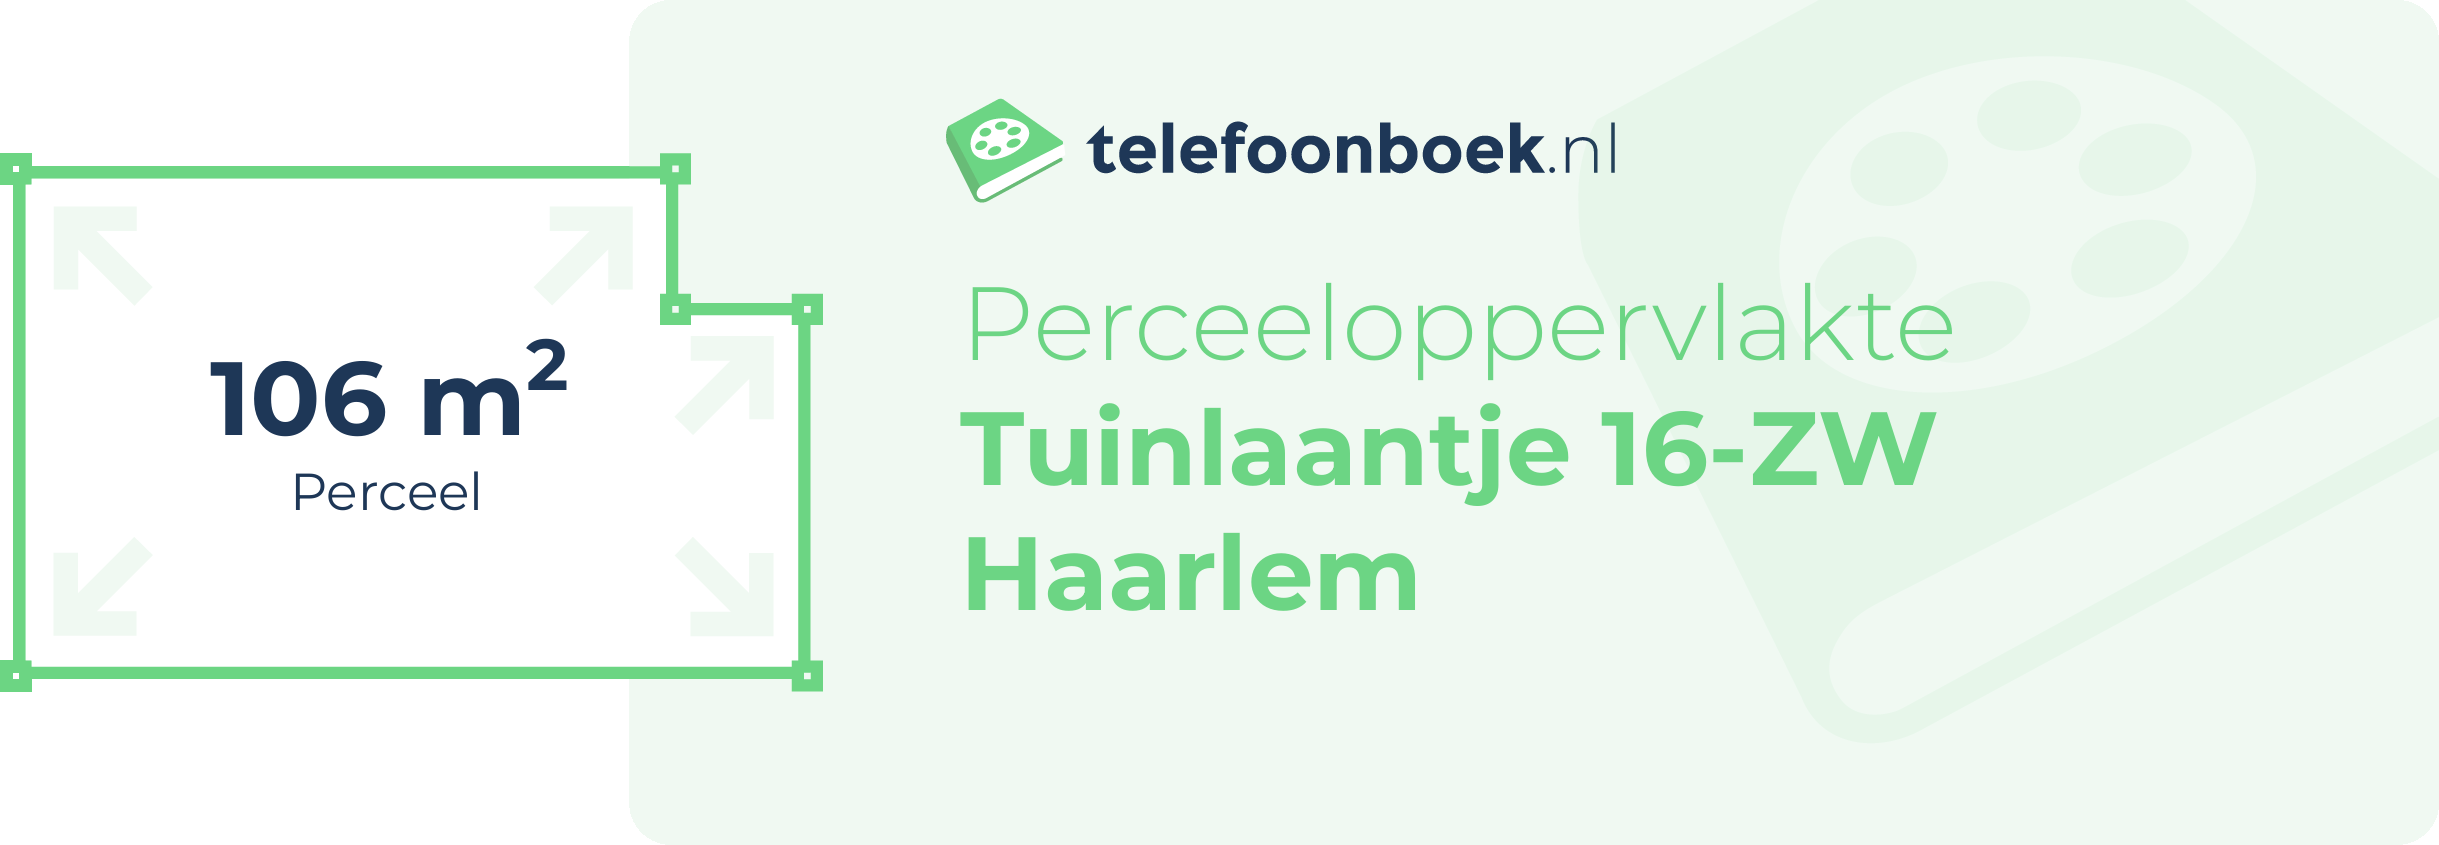 Perceeloppervlakte Tuinlaantje 16-ZW Haarlem